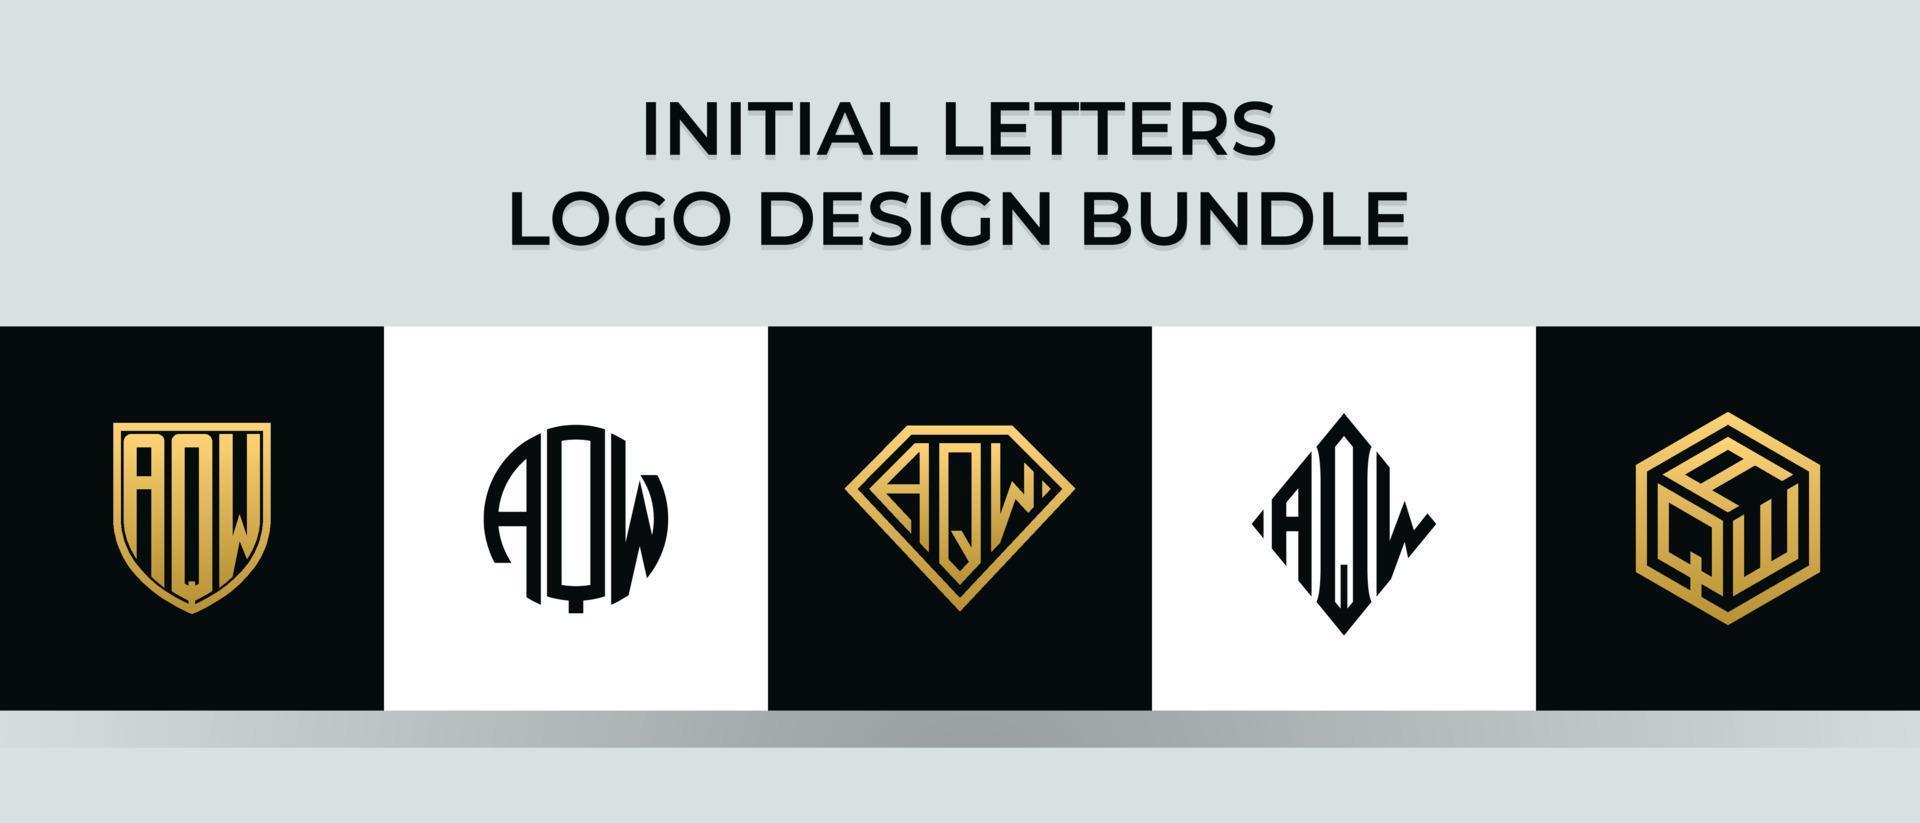 Initial letters AQW logo designs Bundle vector